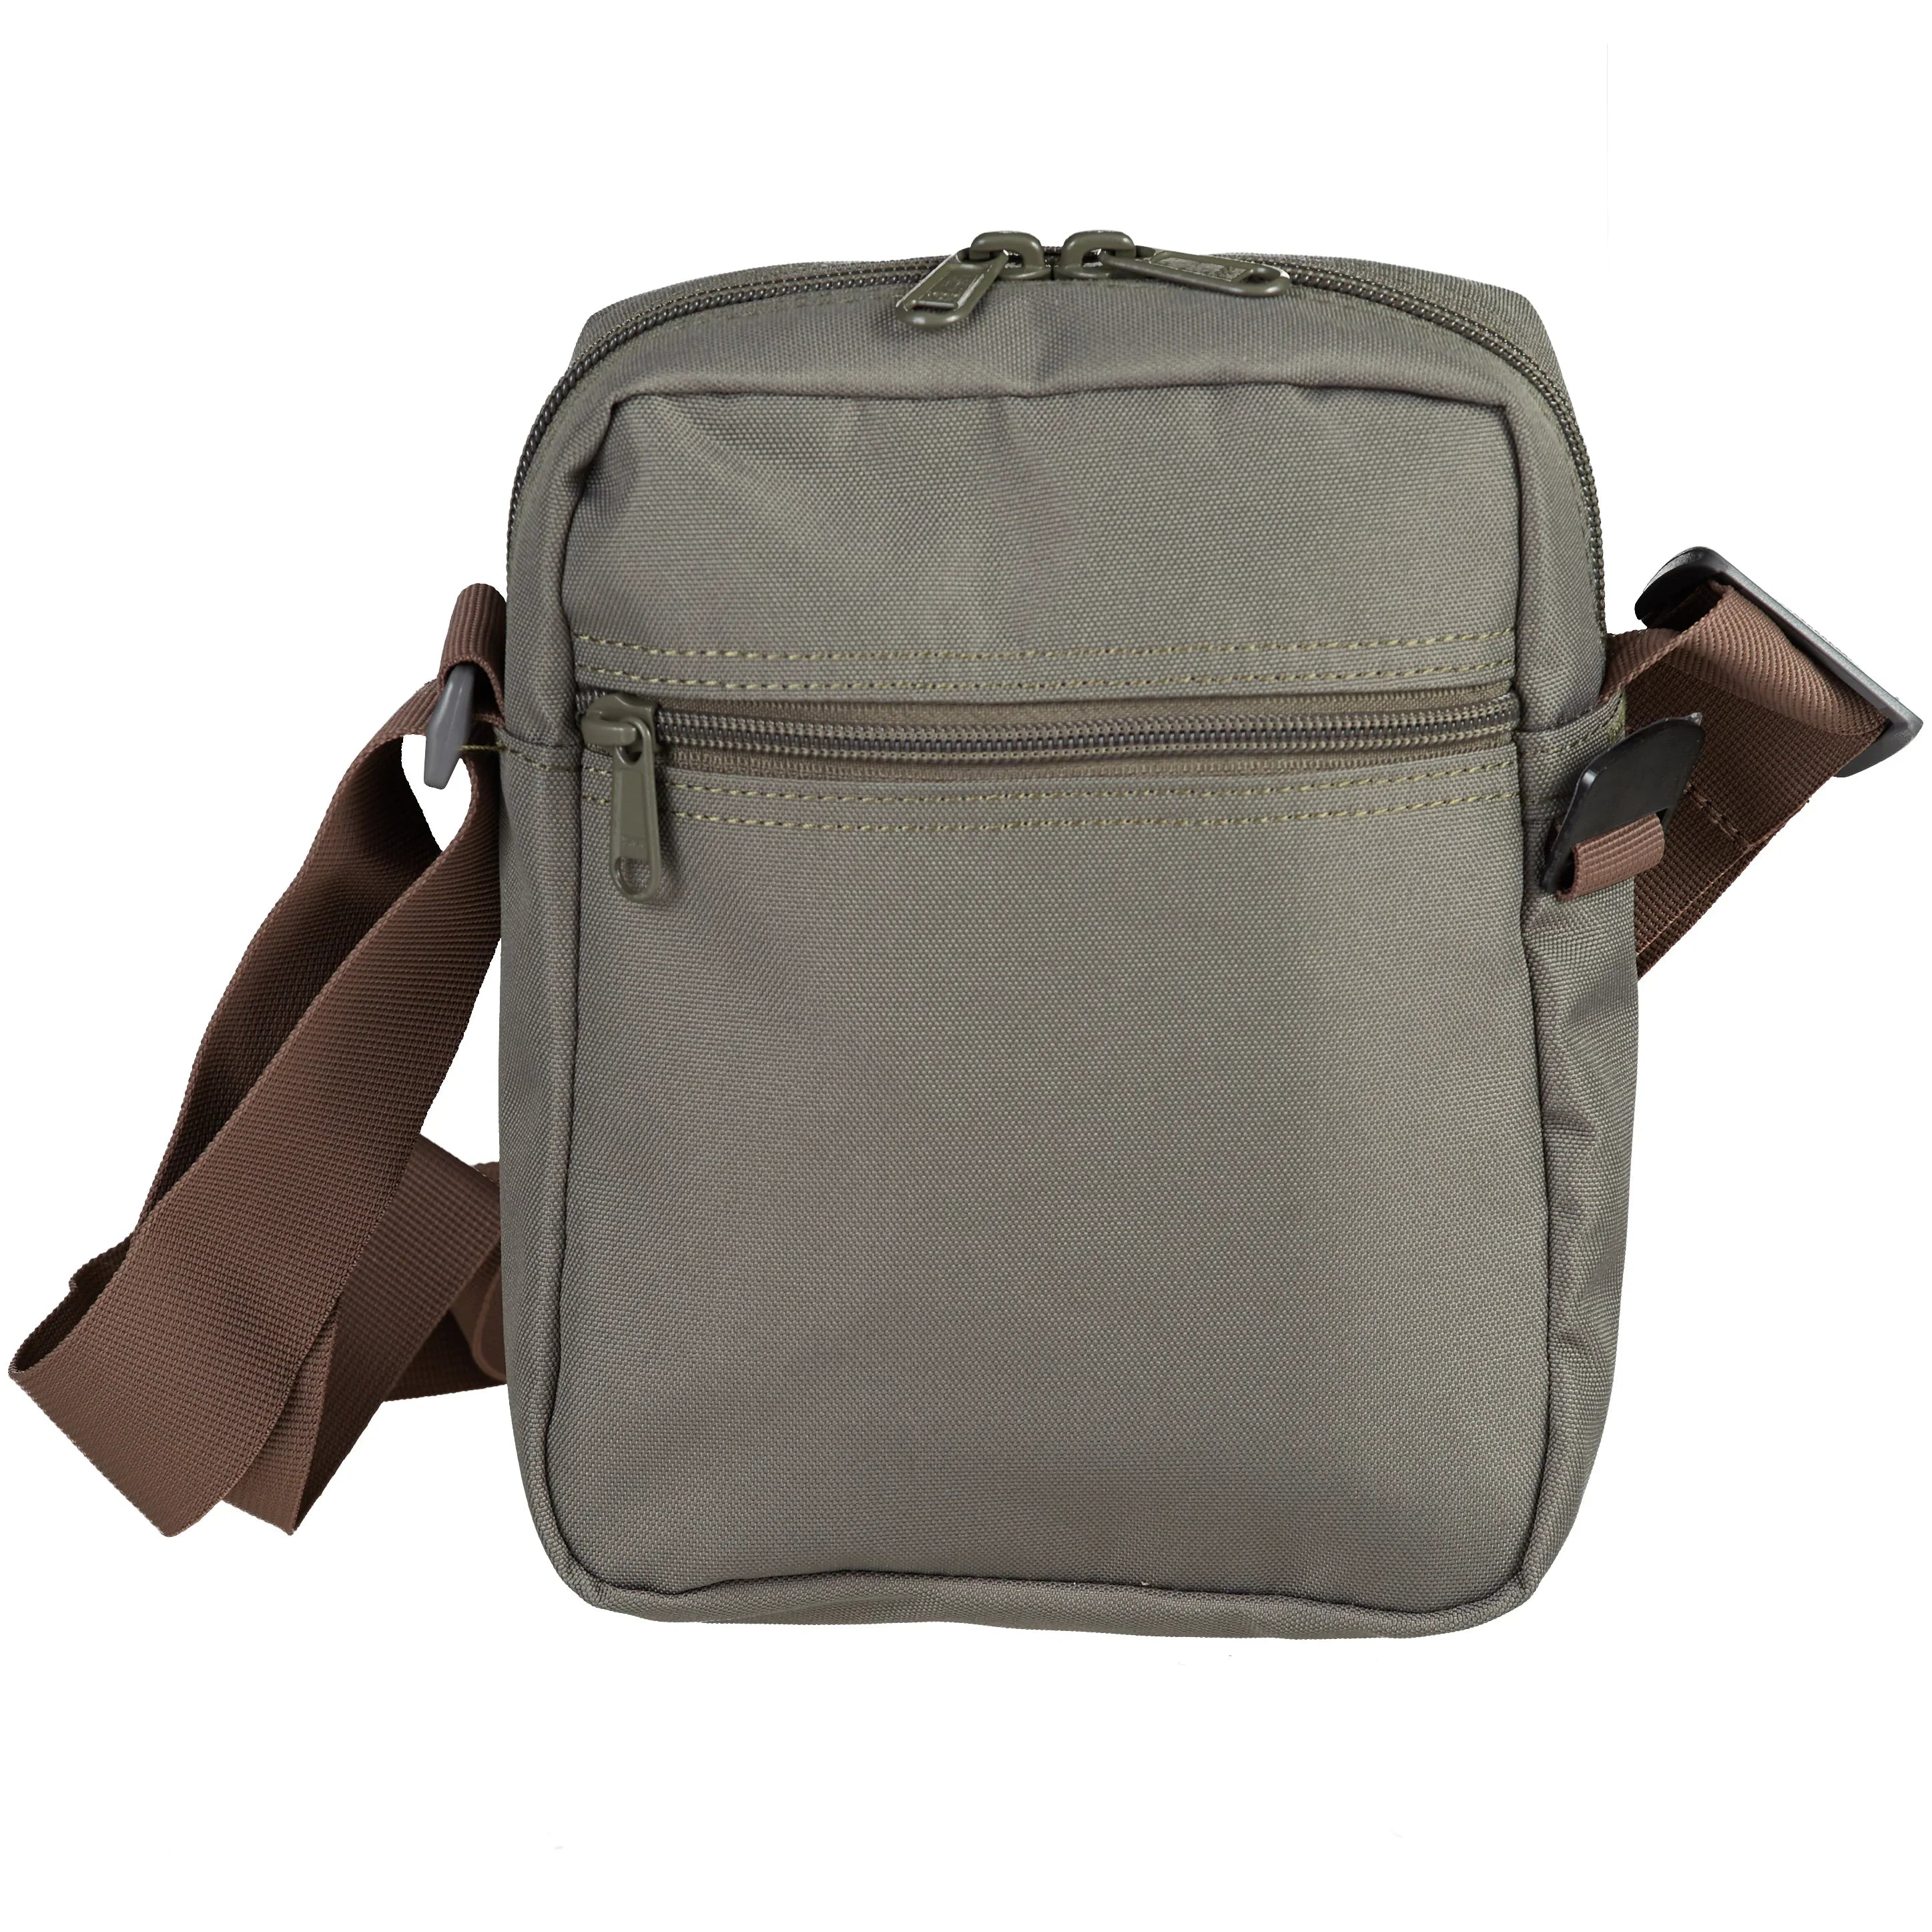 CabinZero Companion Bags Sidekick 3L sac à bandoulière 20 cm - orange chill